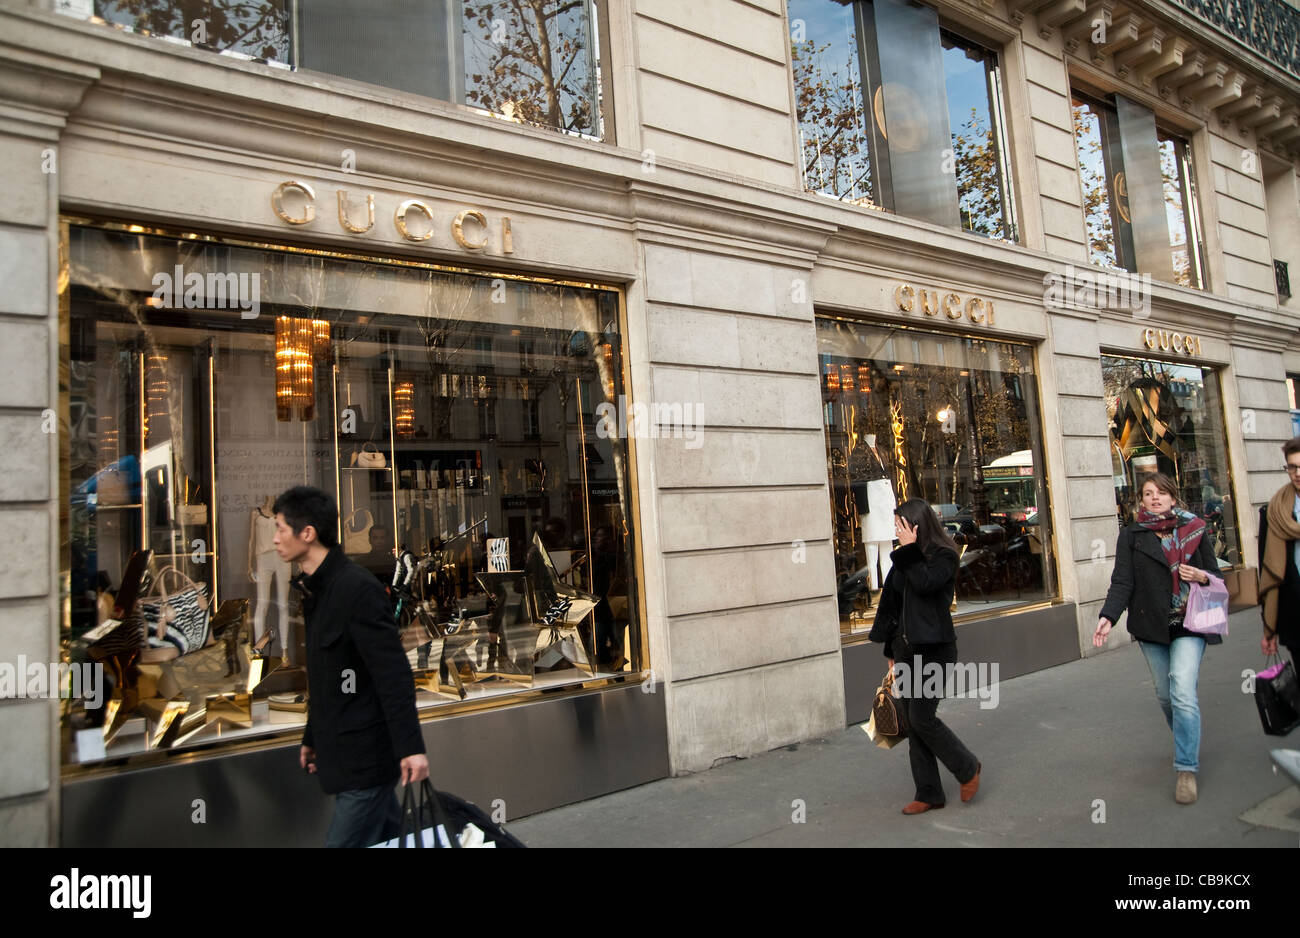 Paris, France - Gucci store Stock Photo - Alamy